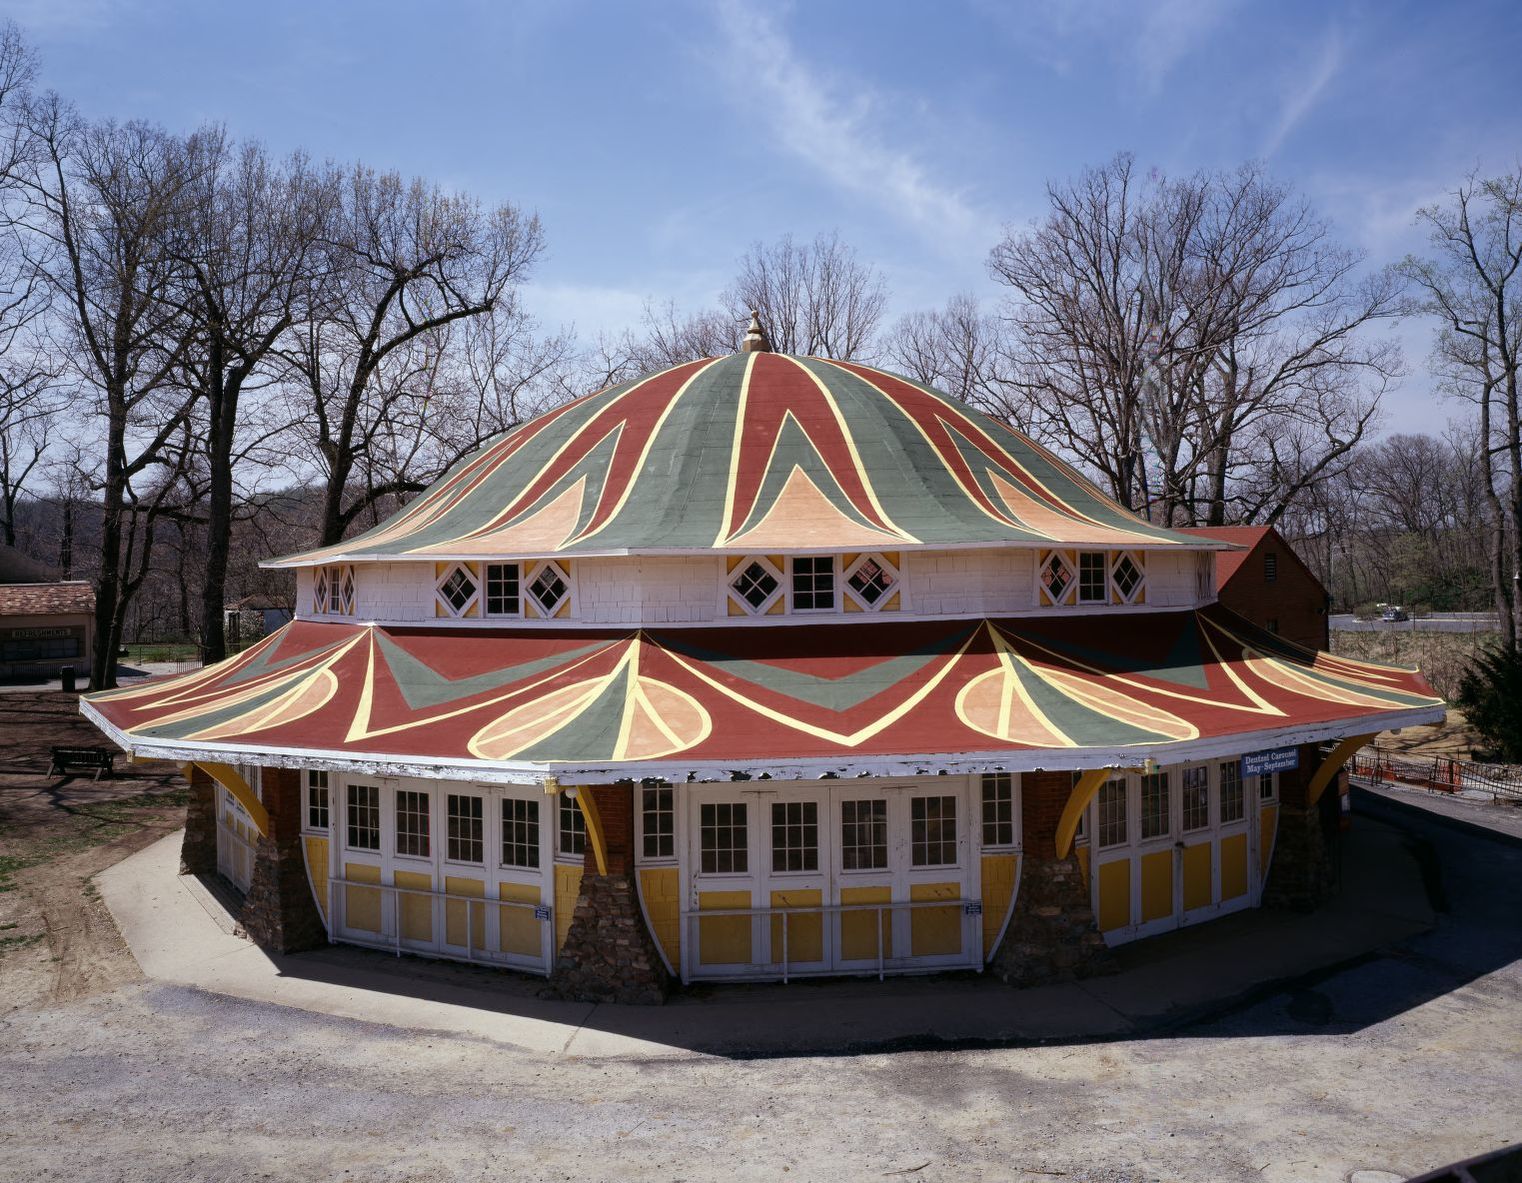 Dentzel Carousel building at Glen Echo amusement park, just outside Washington, D.C., in Glen Echo, Maryland.